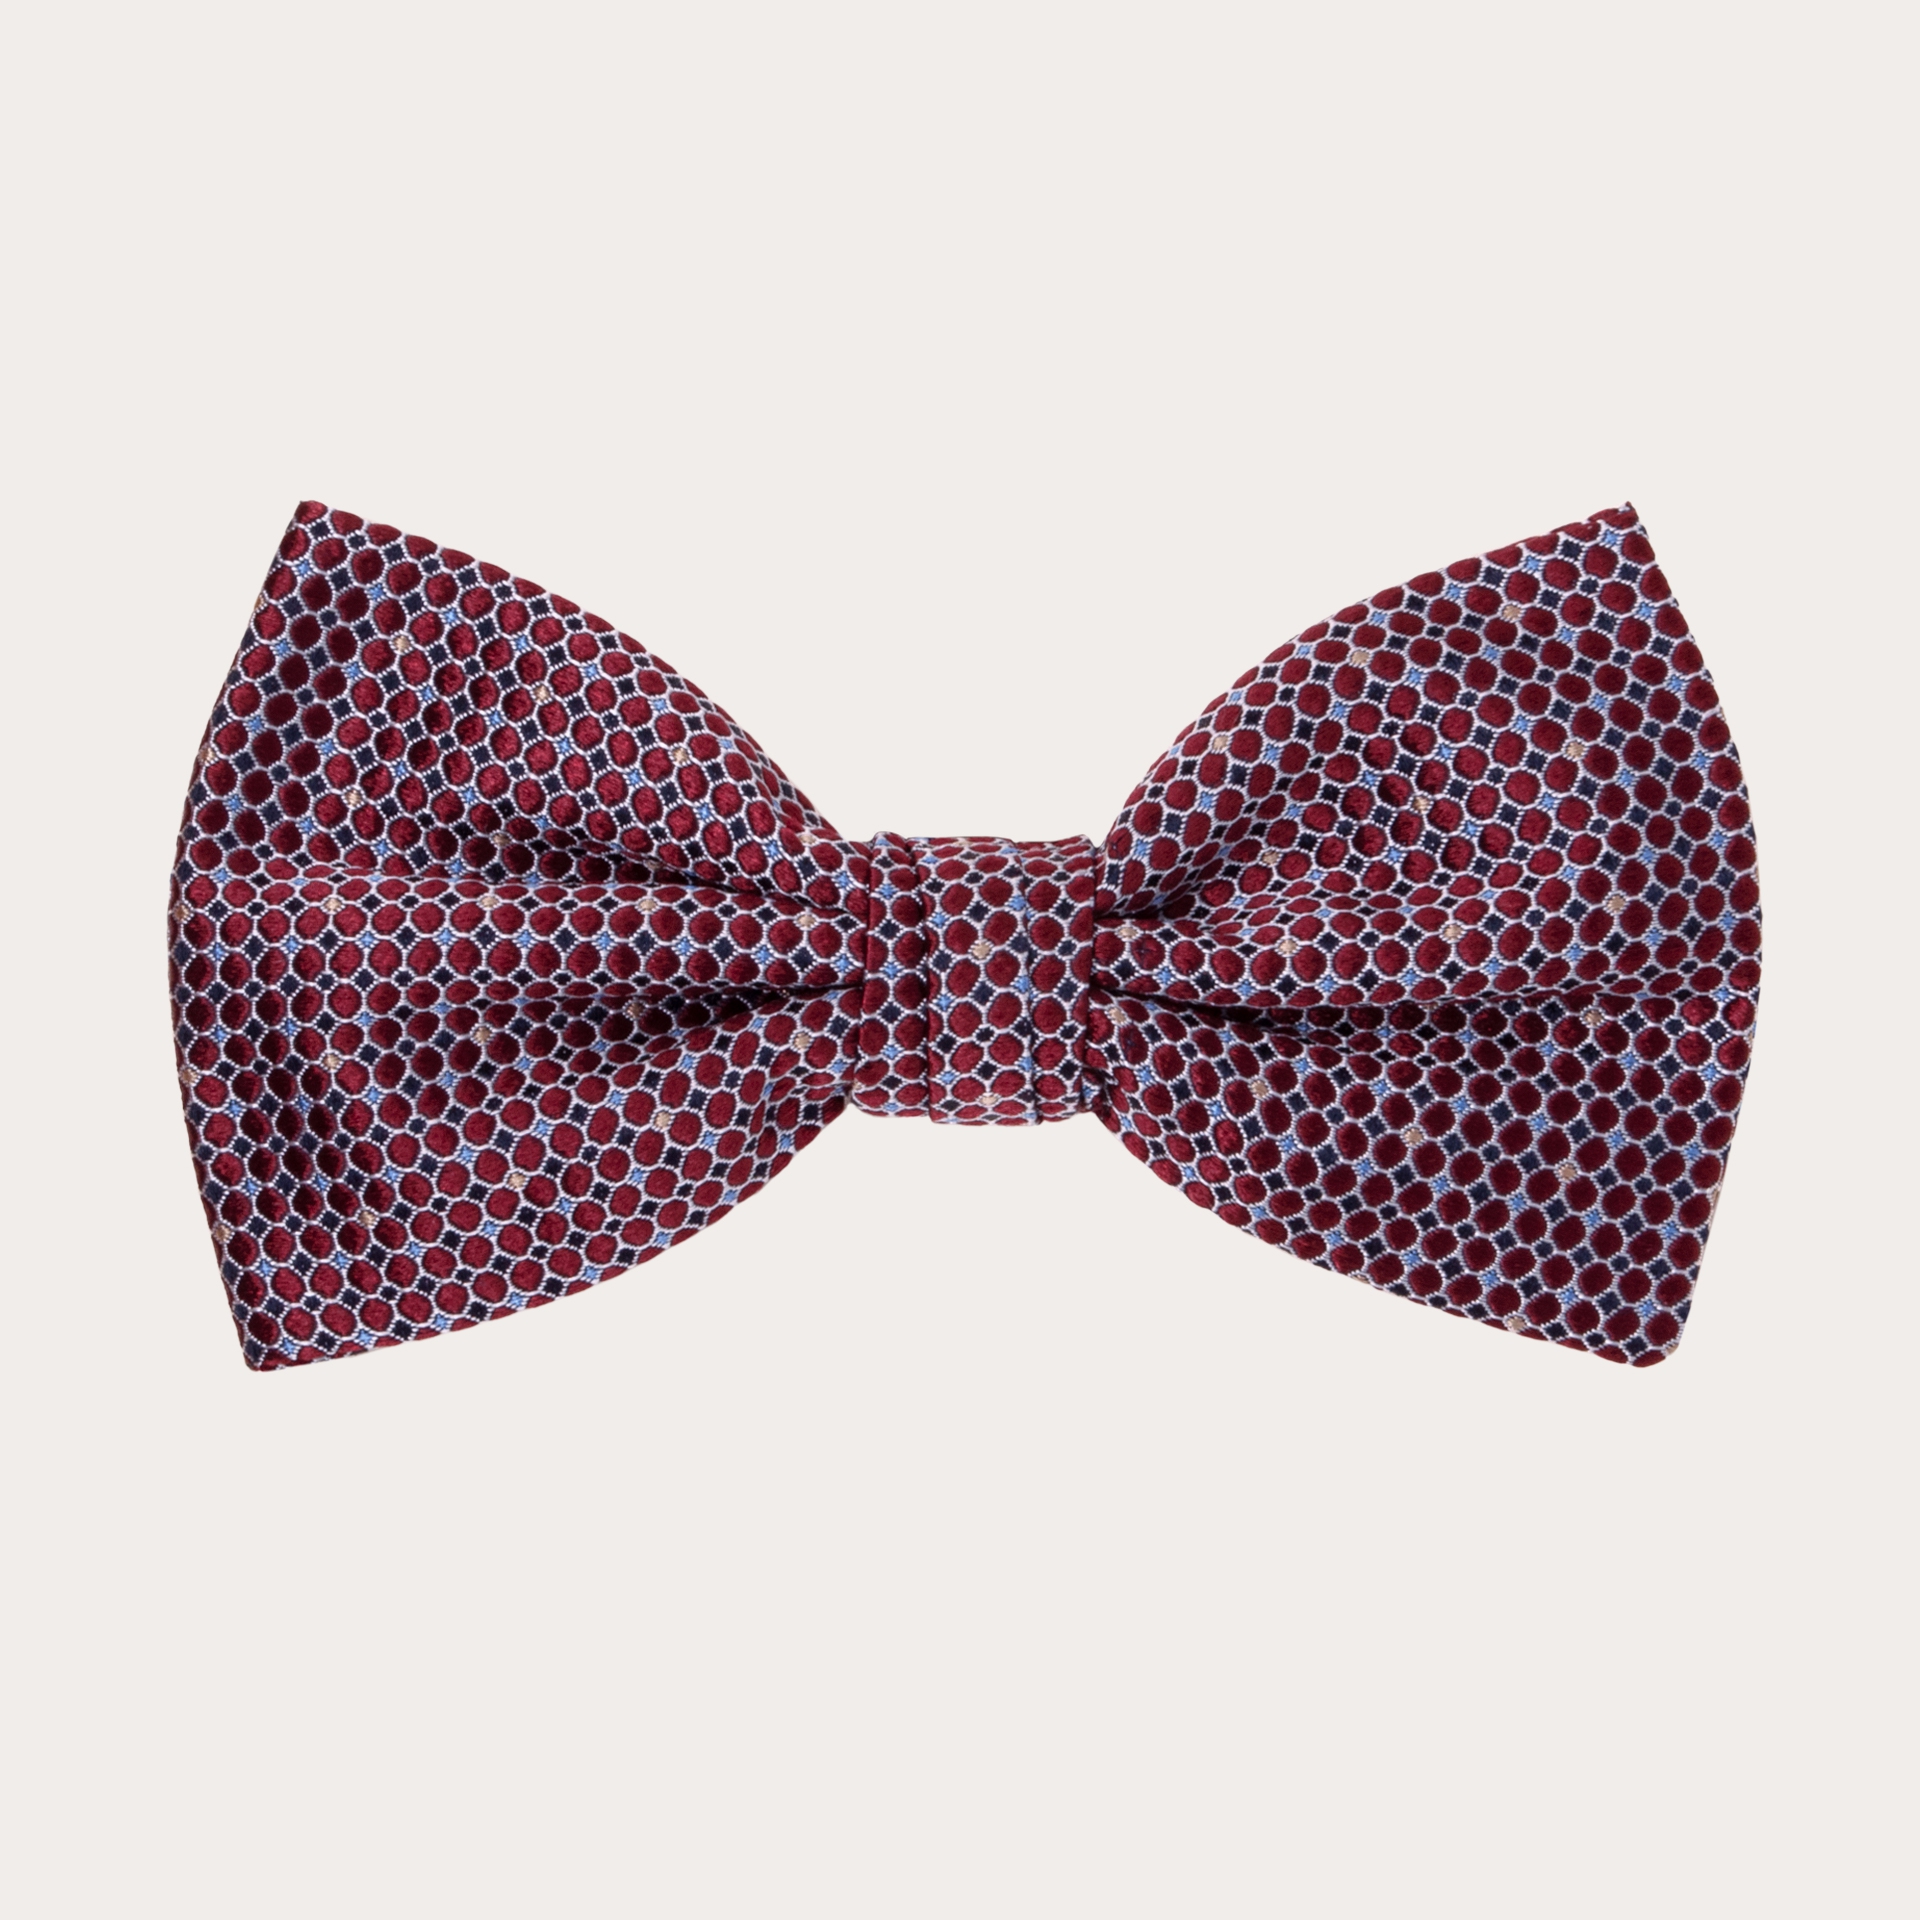 Brucle Silk Pre-tied Bow Tie bordeaux dot